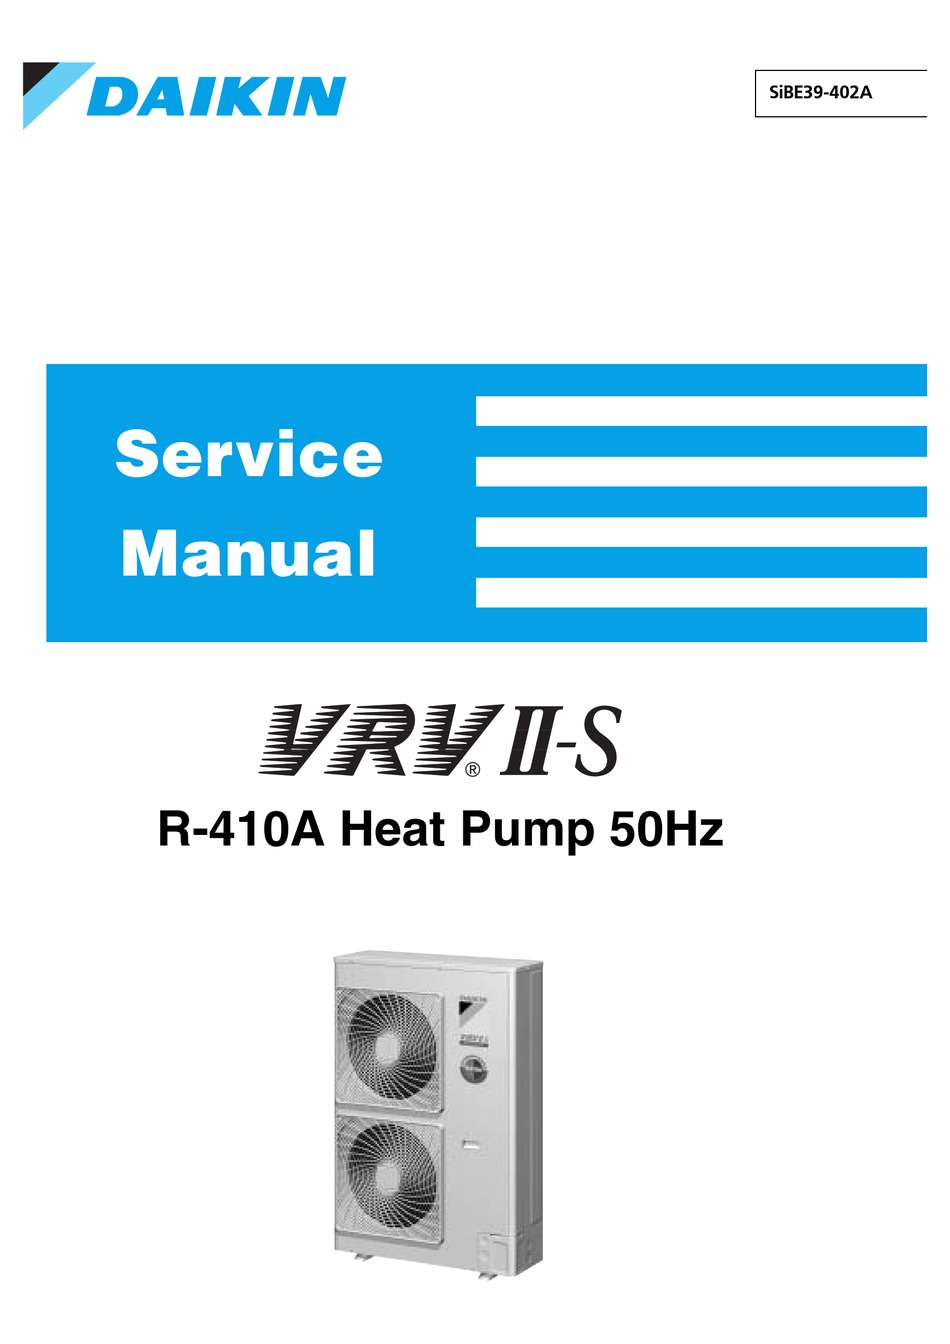 DAIKIN R-410A SERVICE MANUAL Pdf Download | ManualsLib